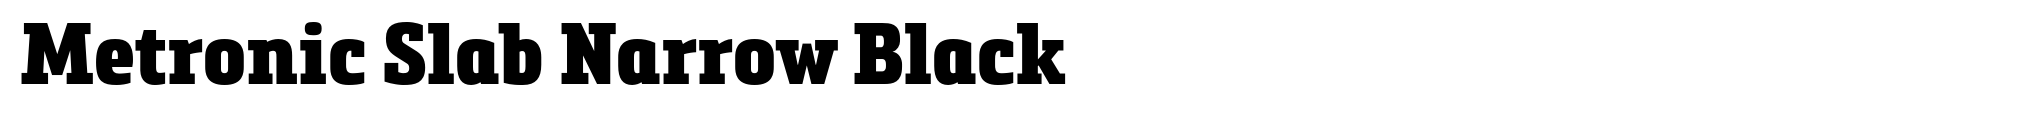 Metronic Slab Narrow Black image